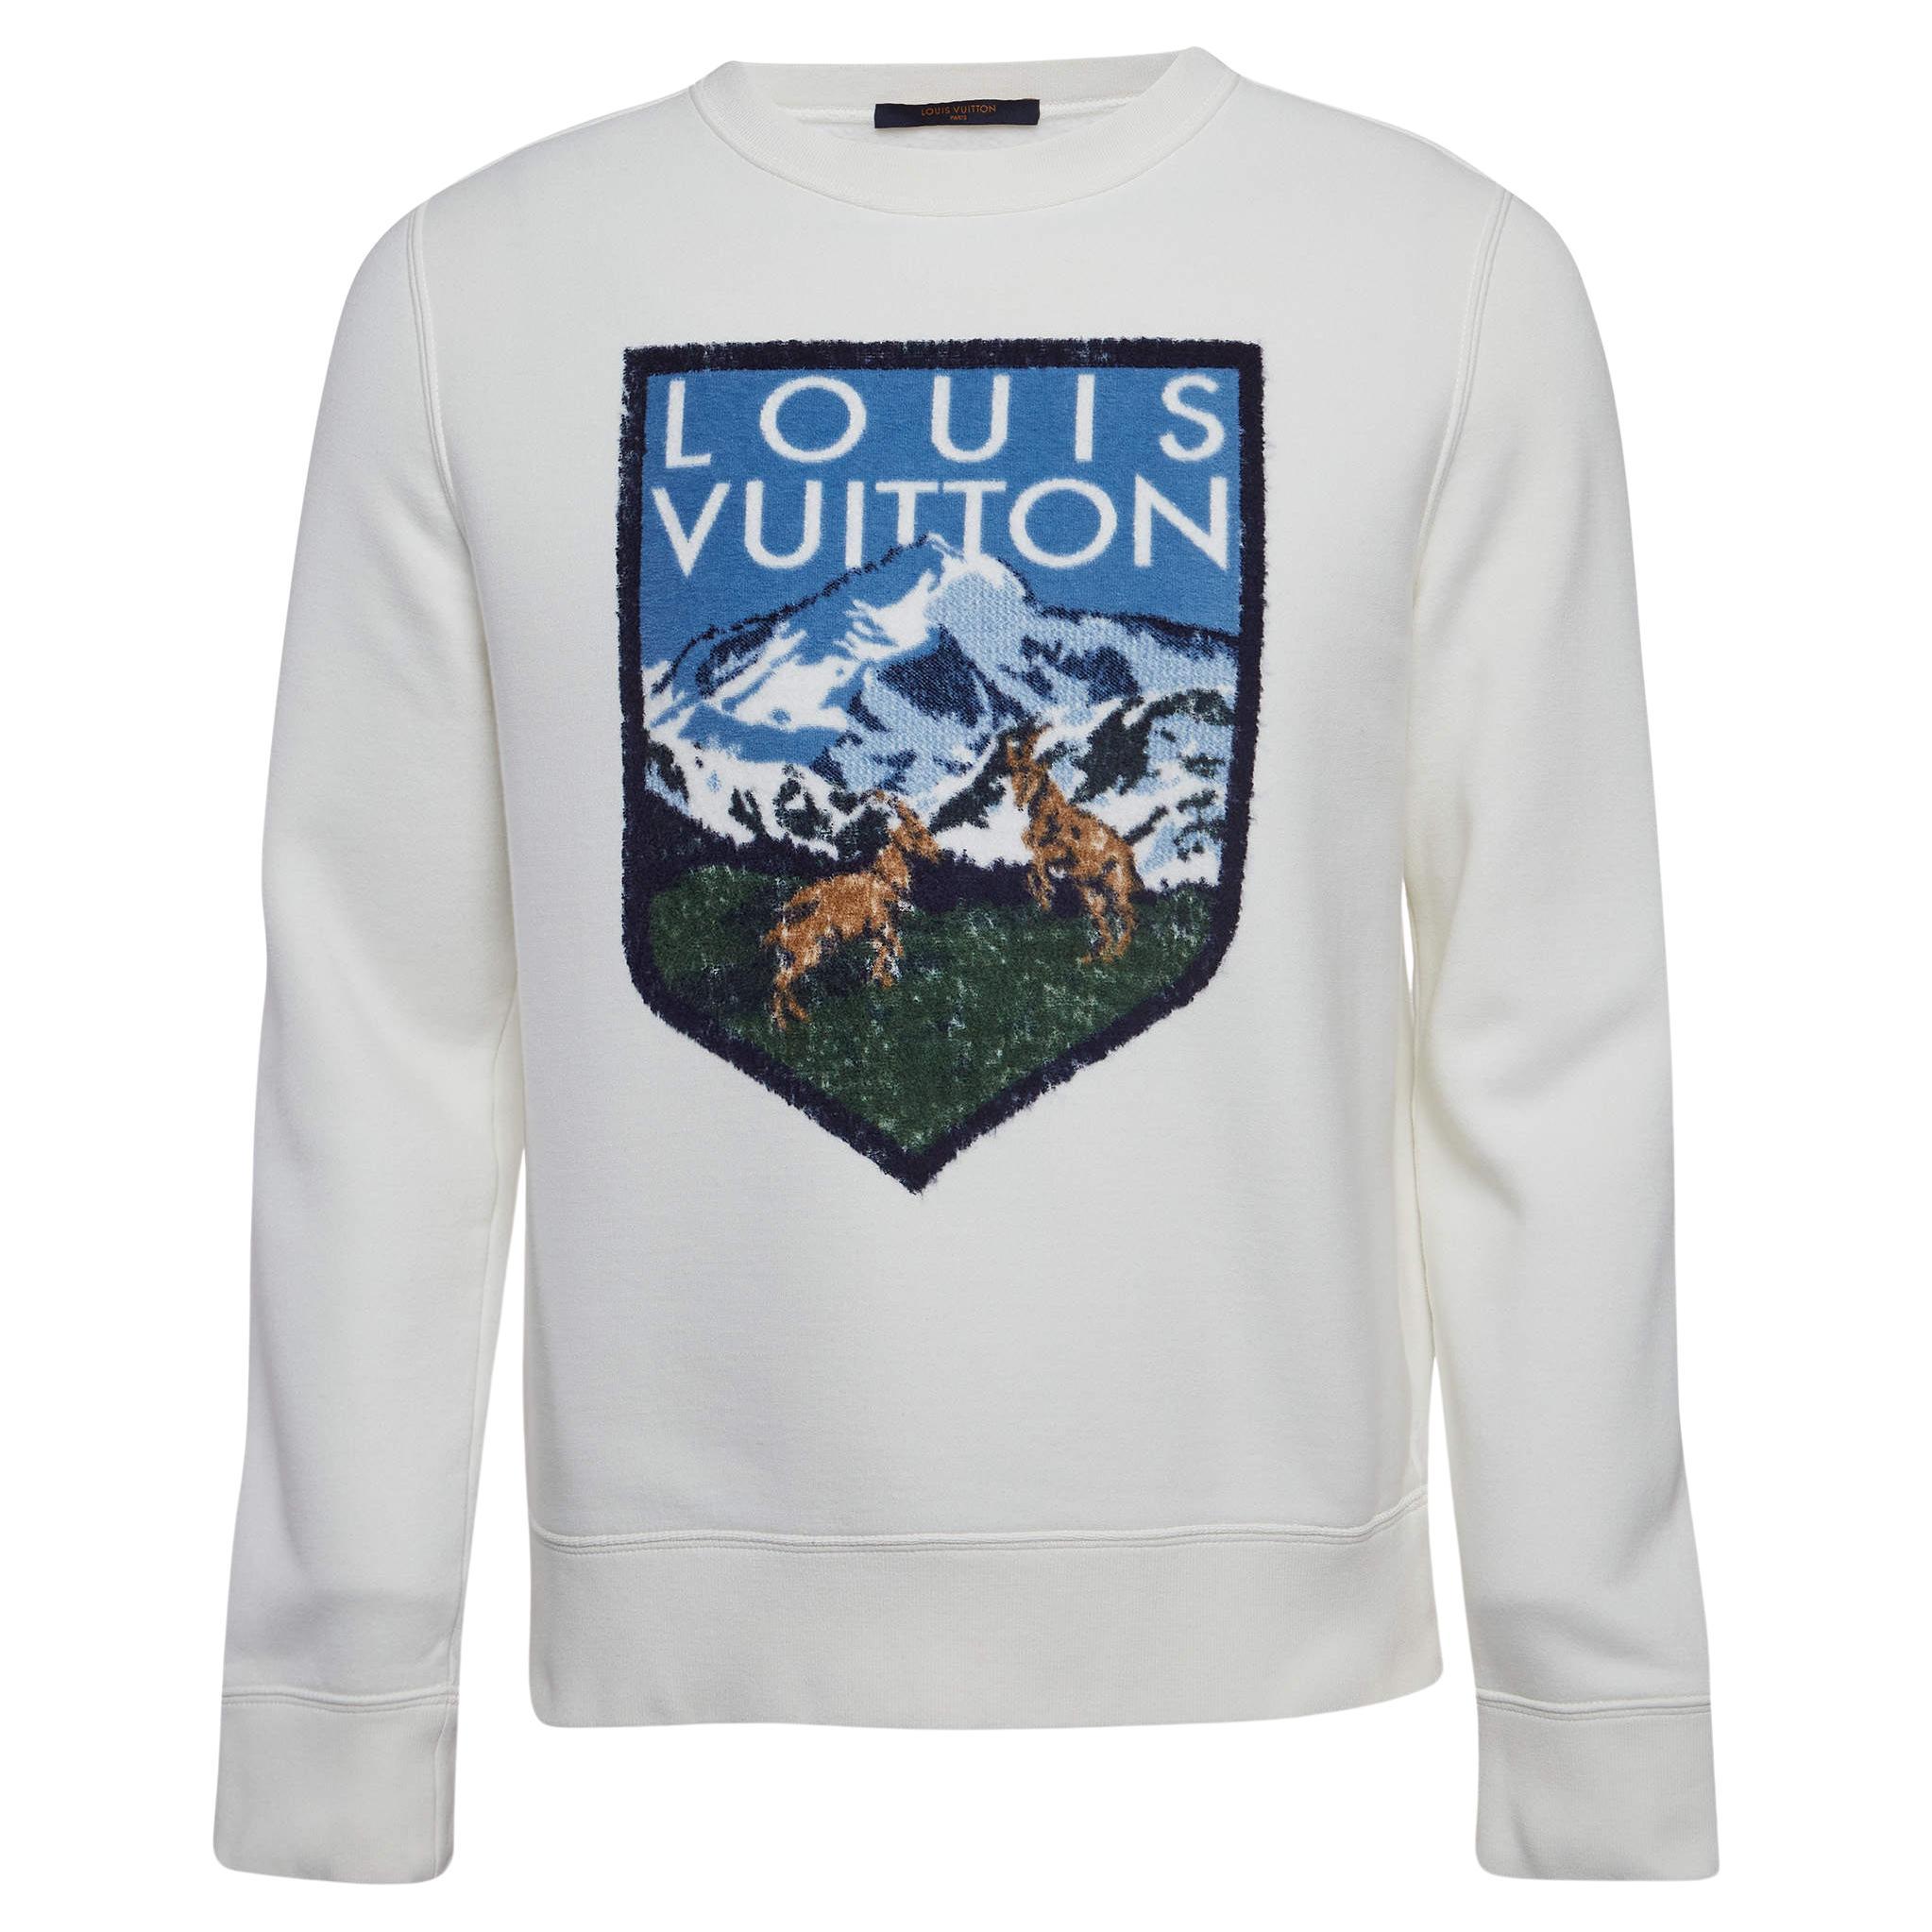 Louis Vuitton White National Park Patterned Knit Crew Neck Sweatshirt S